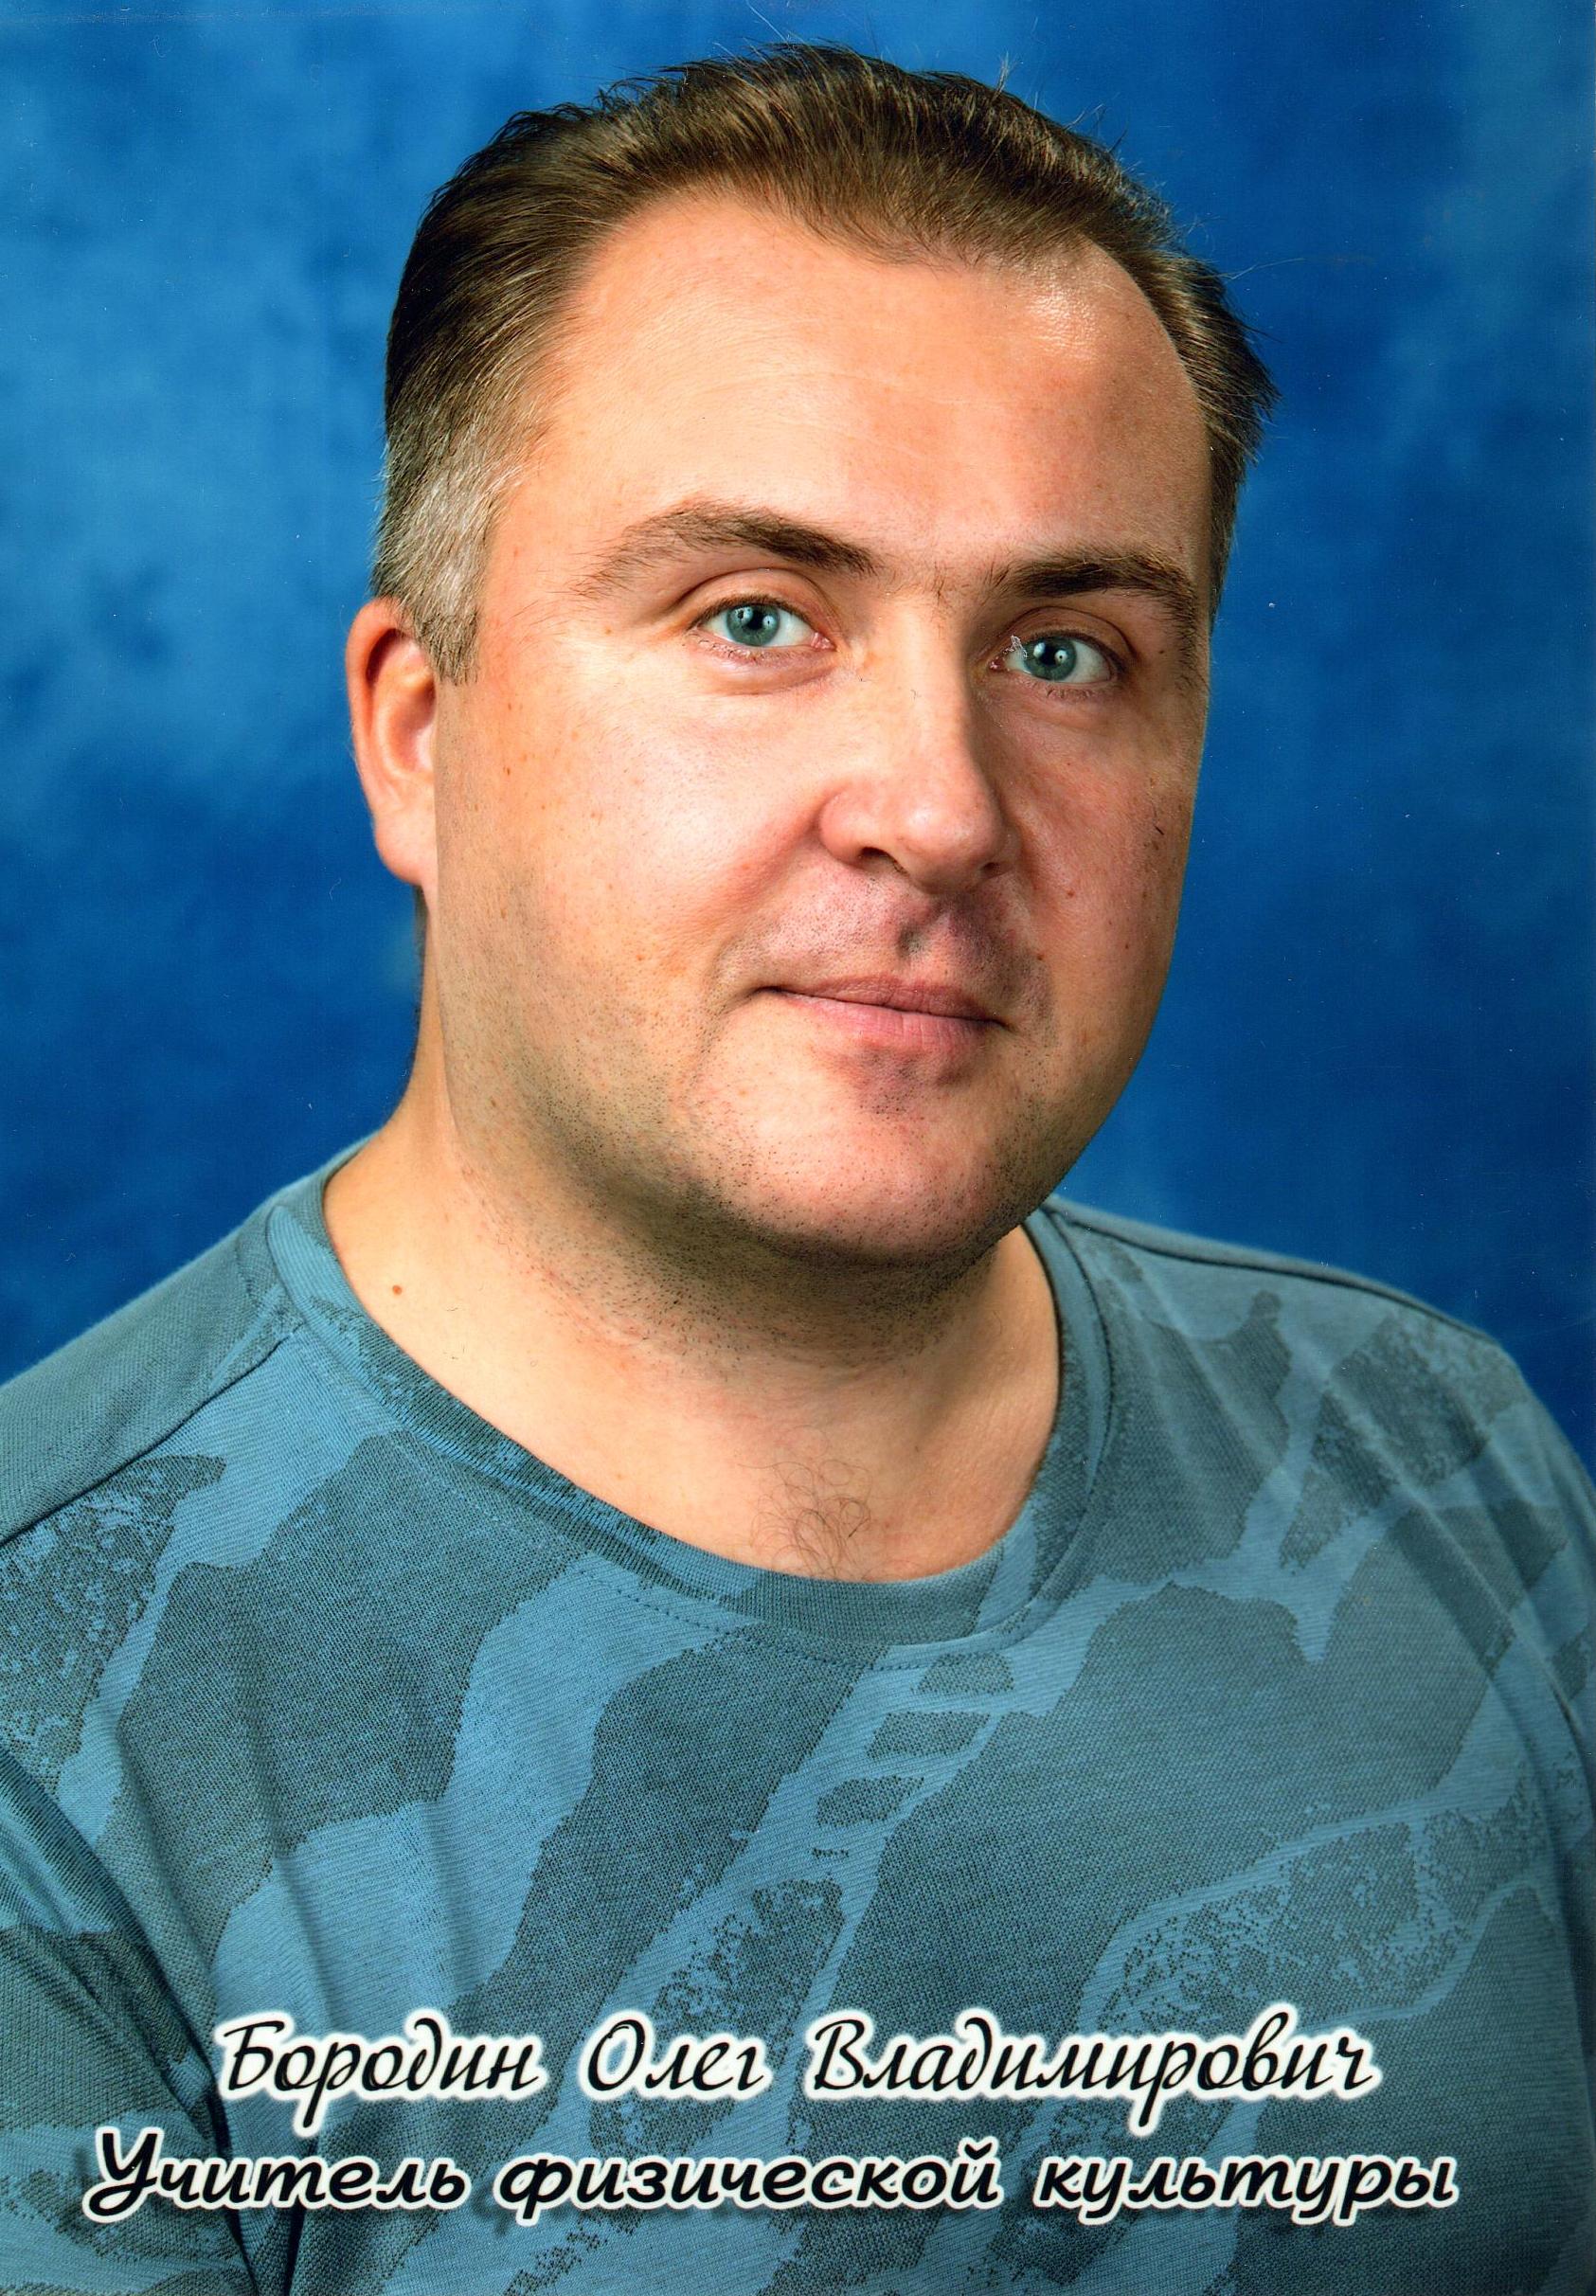 Бородин Олег Владимирович.